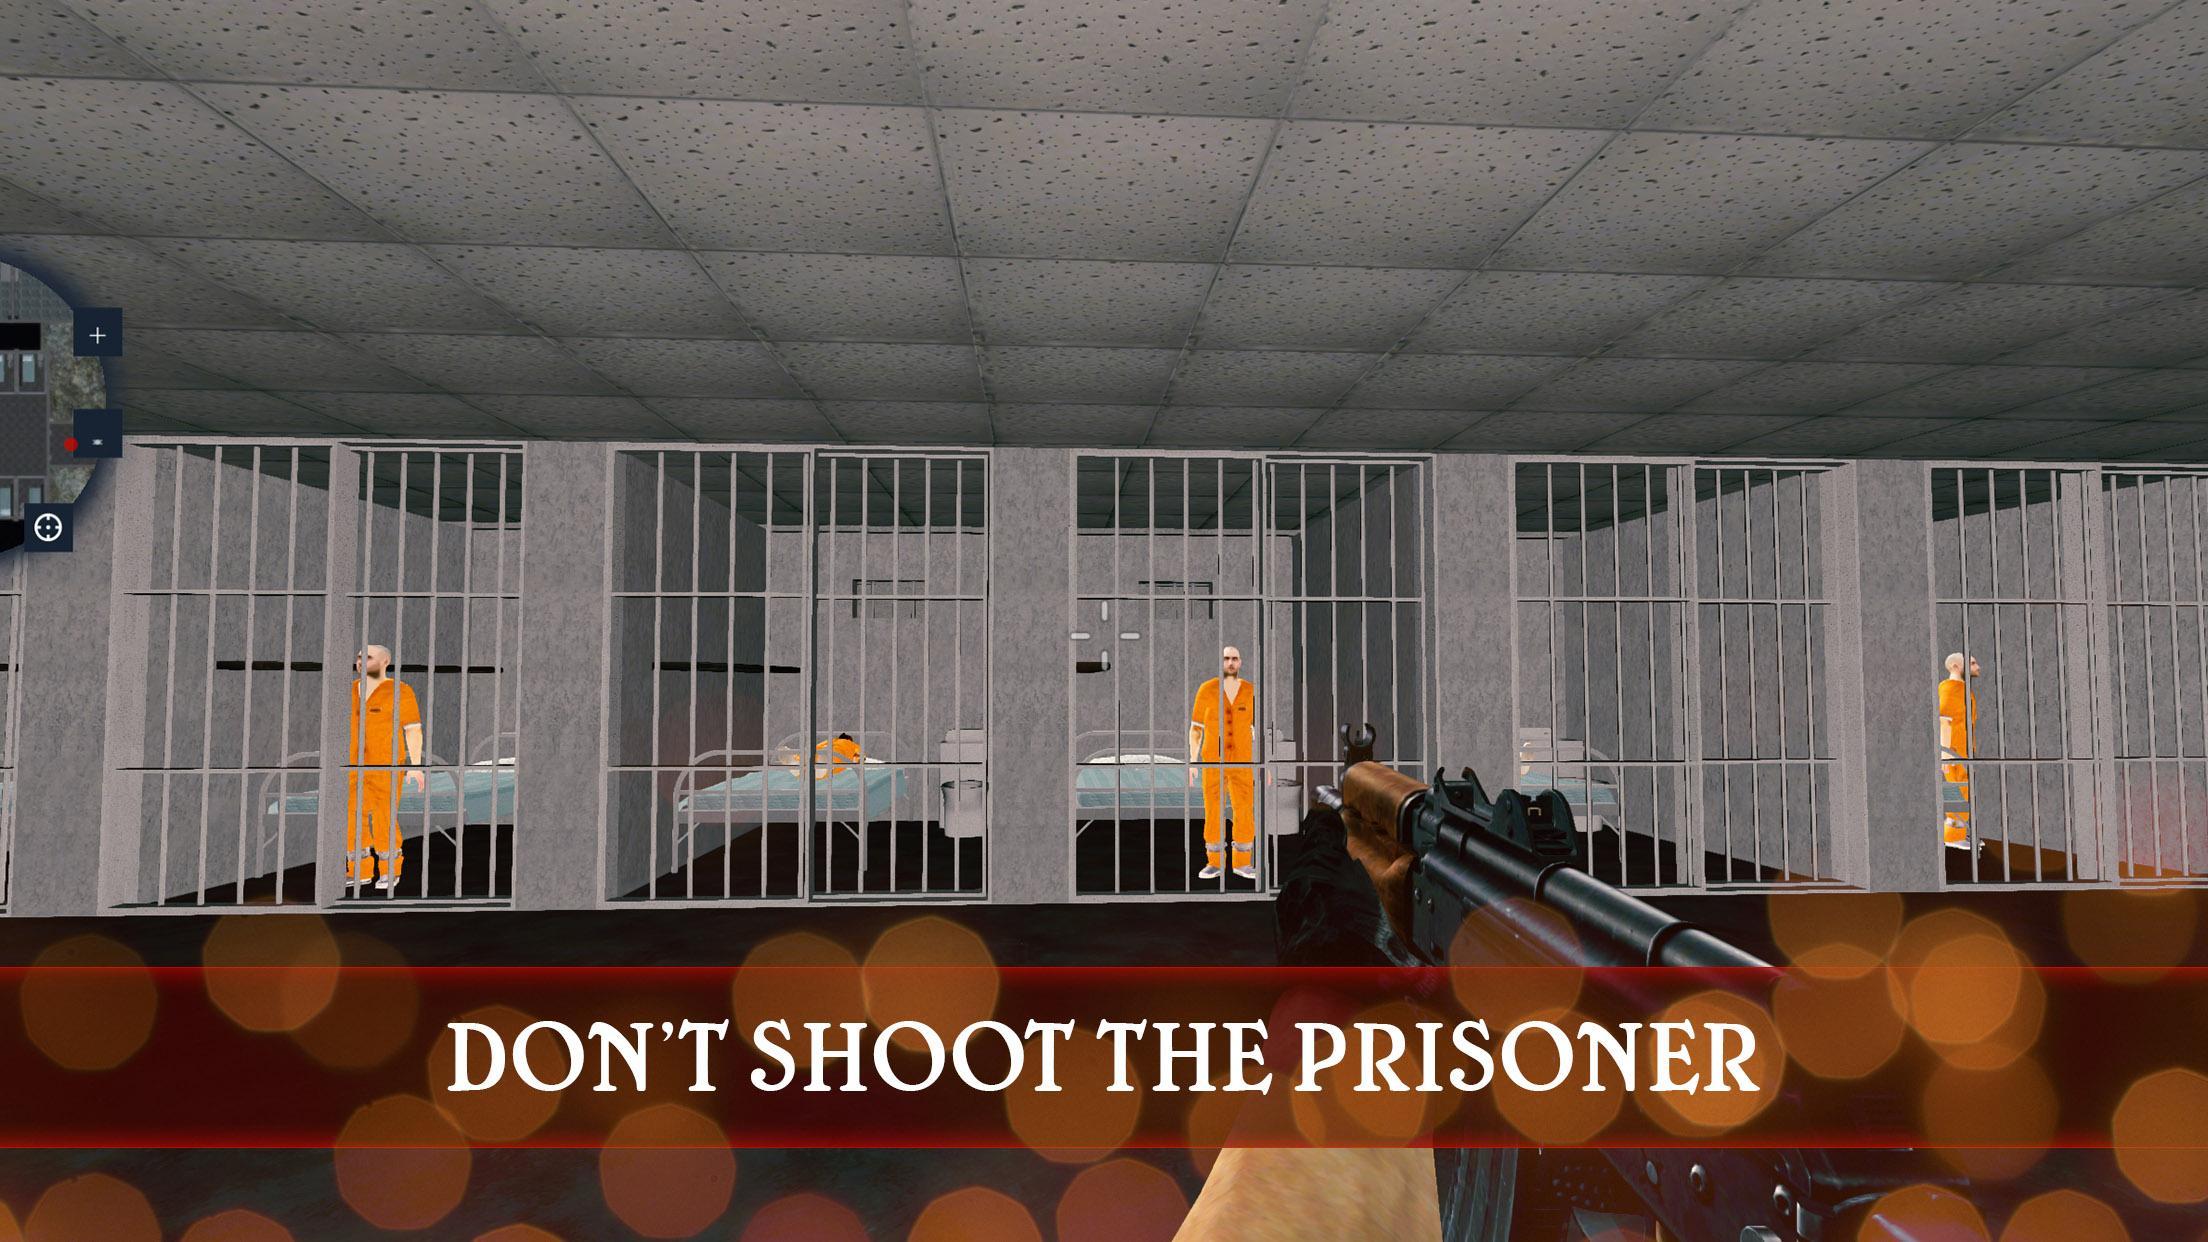 Prison escape алькатрас. Prison Break: Alcatraz. Присон Импере Алькатрос. Alcatraz: Prison Escape обложка. Игра Prison Escape первый день Алькатрас.